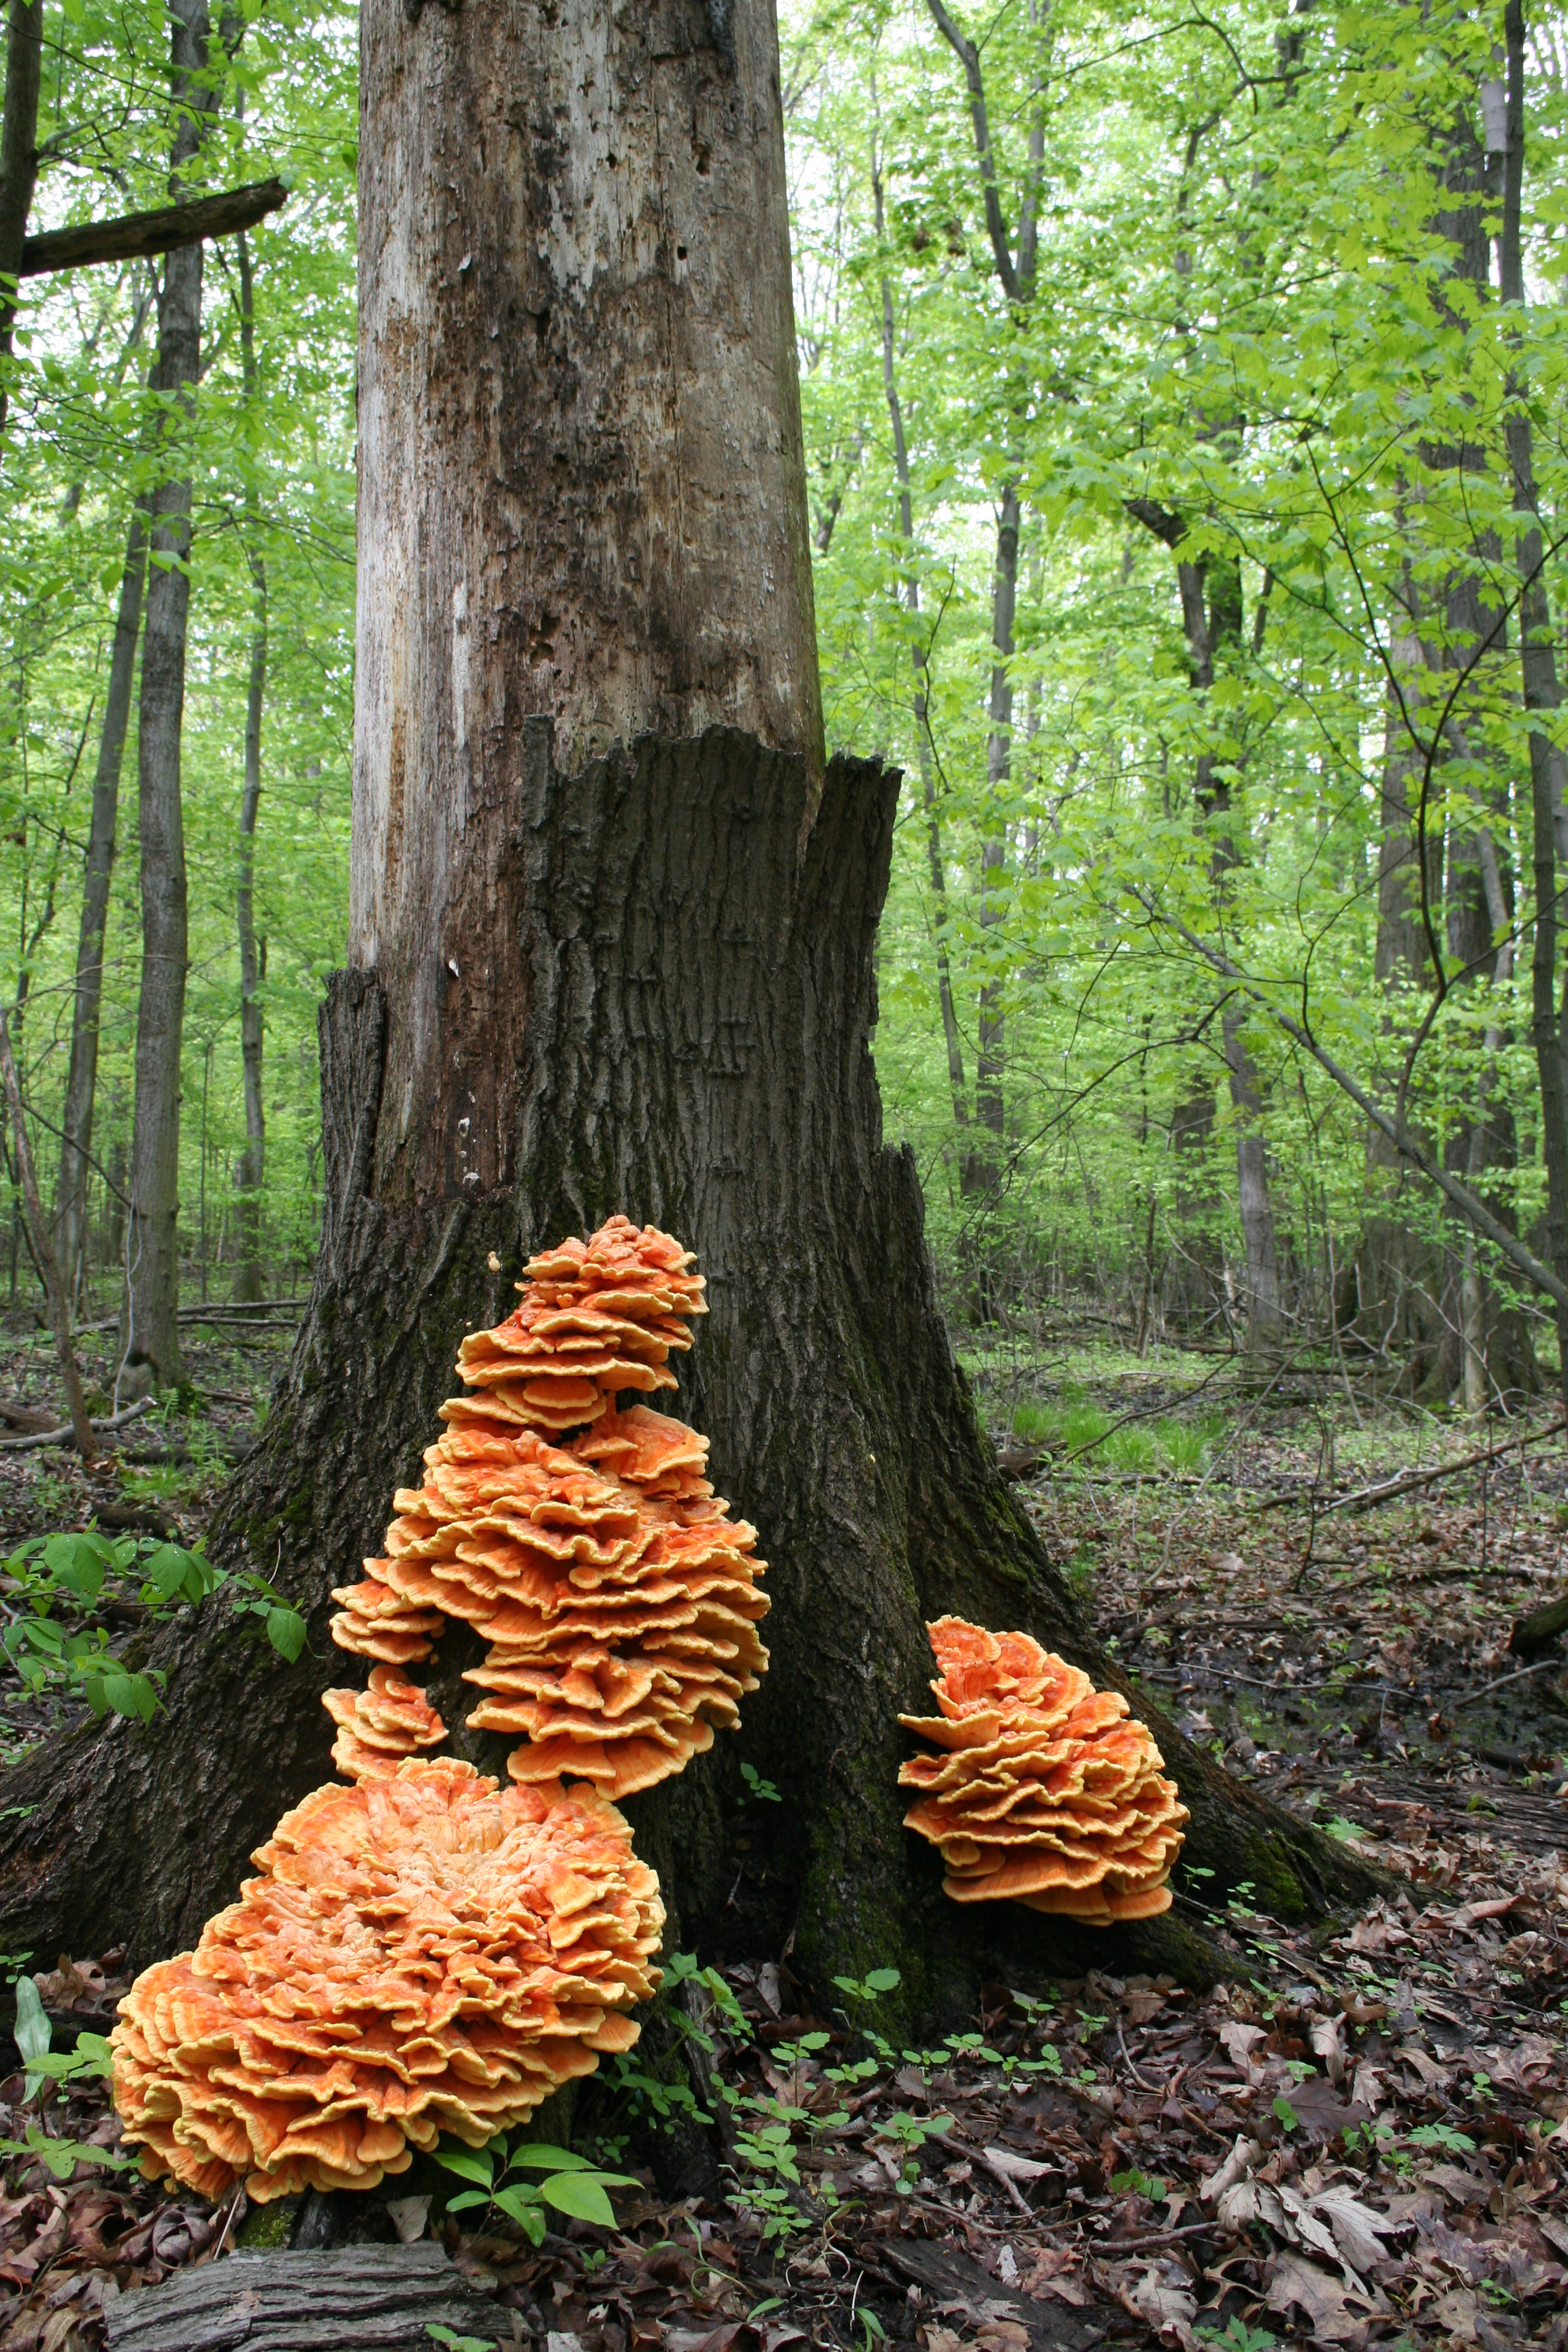 Sulphur shelf fungus found on a tree along the Wet Woods Trail 